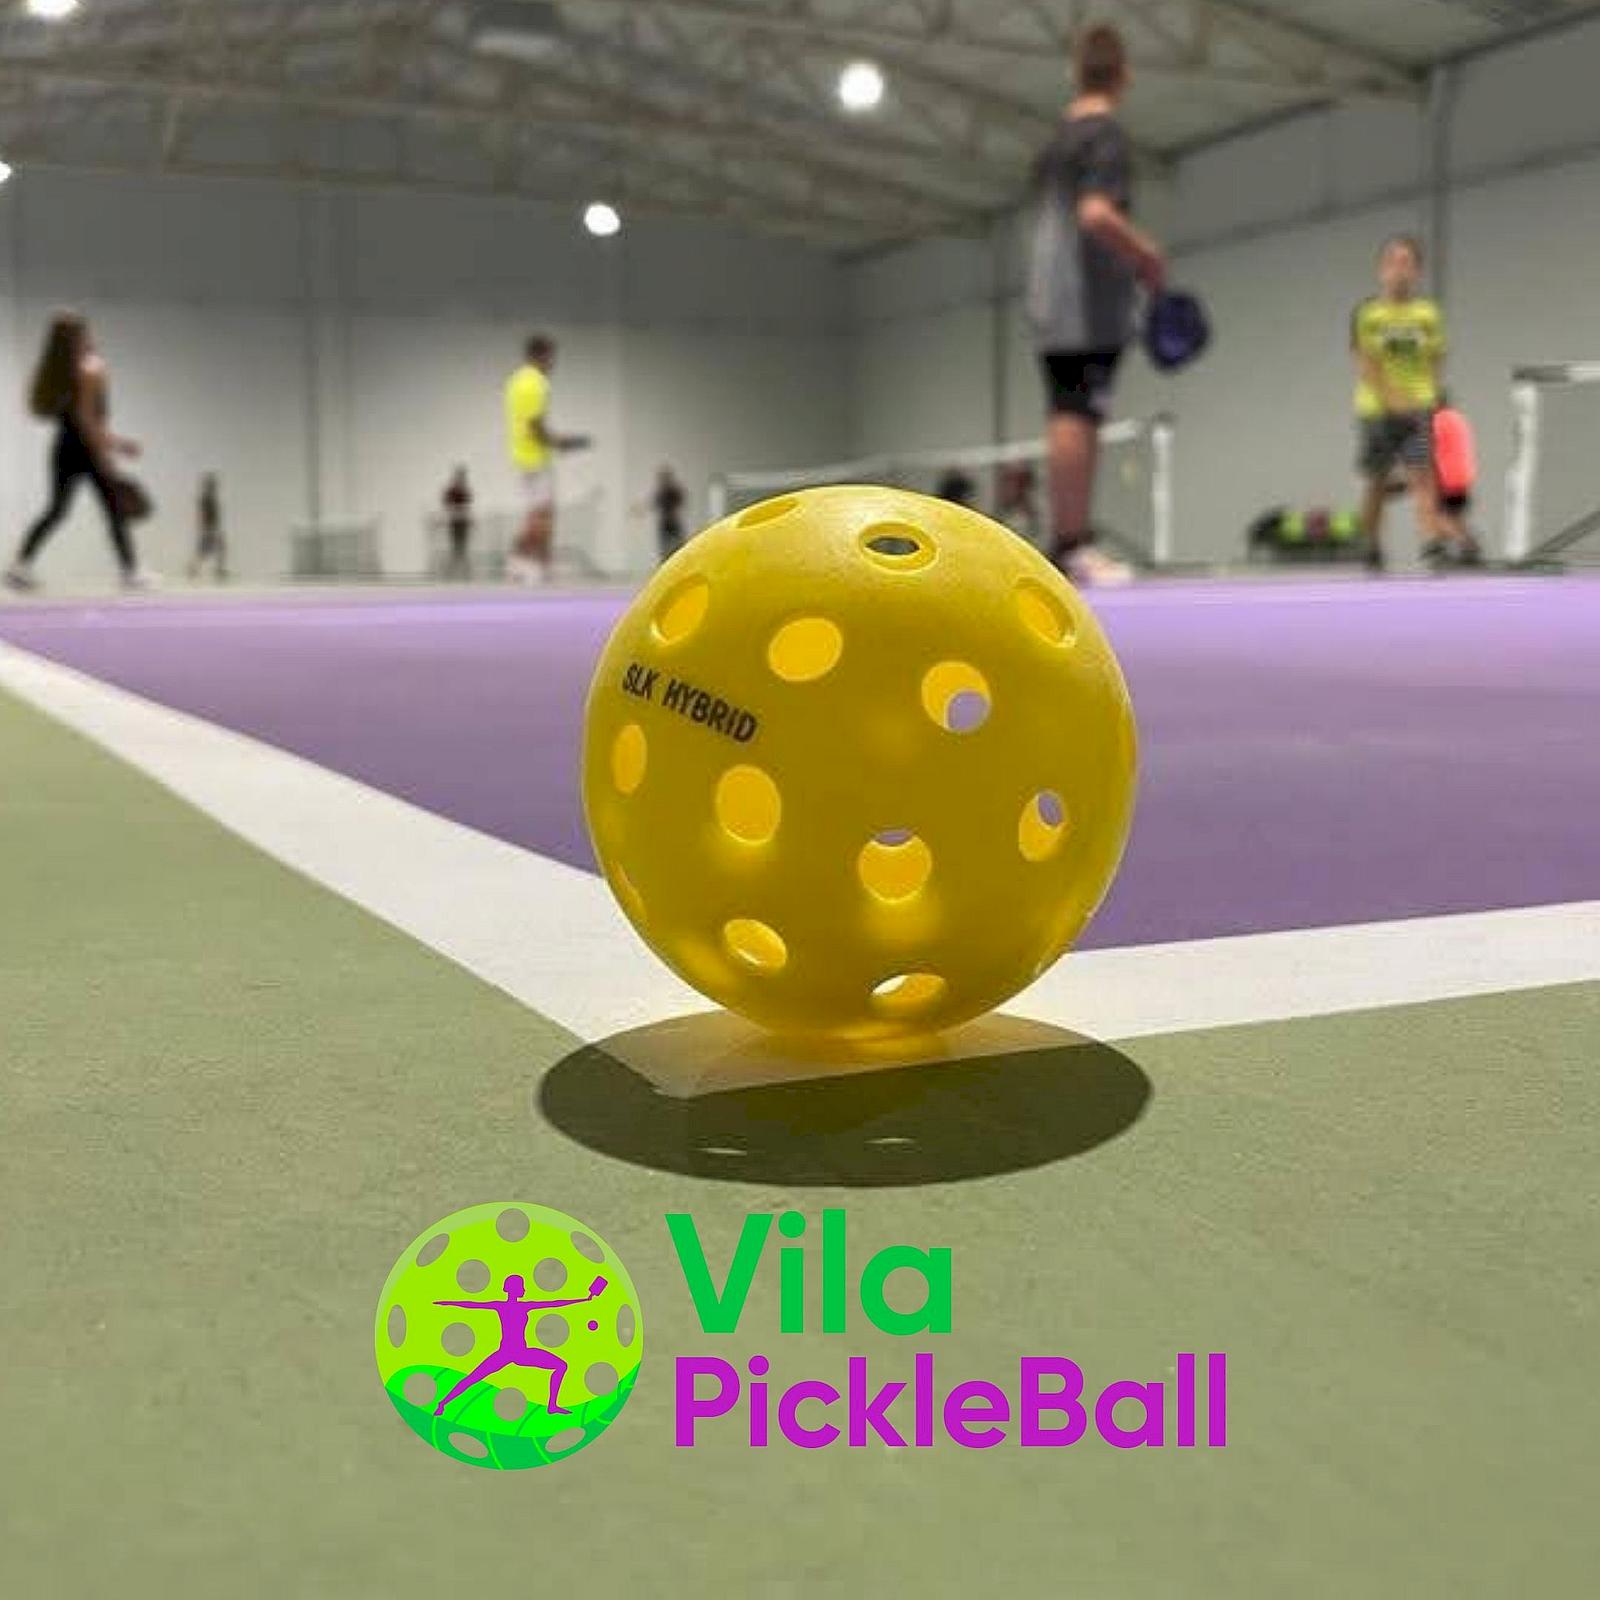 Vila Pickleball pistas para jugar al Pickleball, alquiler de material, yoga, meditacion, masajes